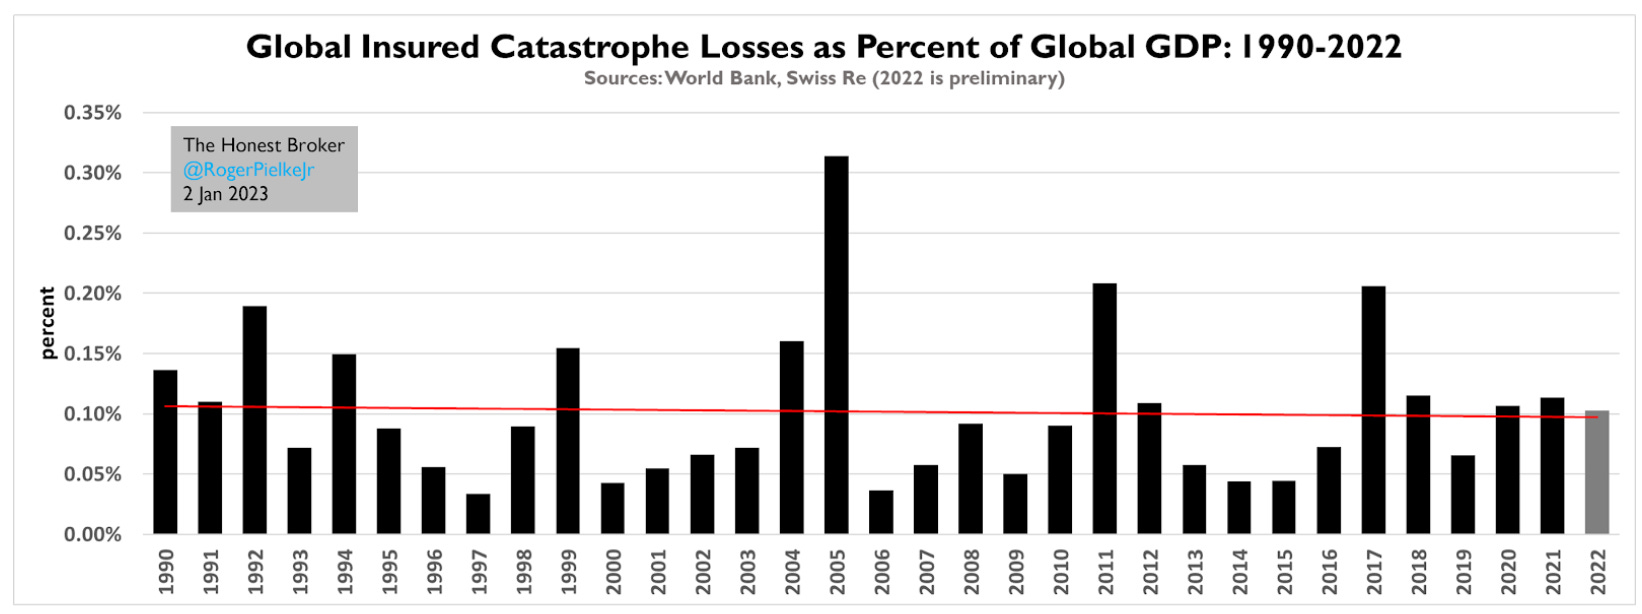 IMAGE 3 - Global Insured Catastrophe Losses as Percent of Global GDP: 1990-2022